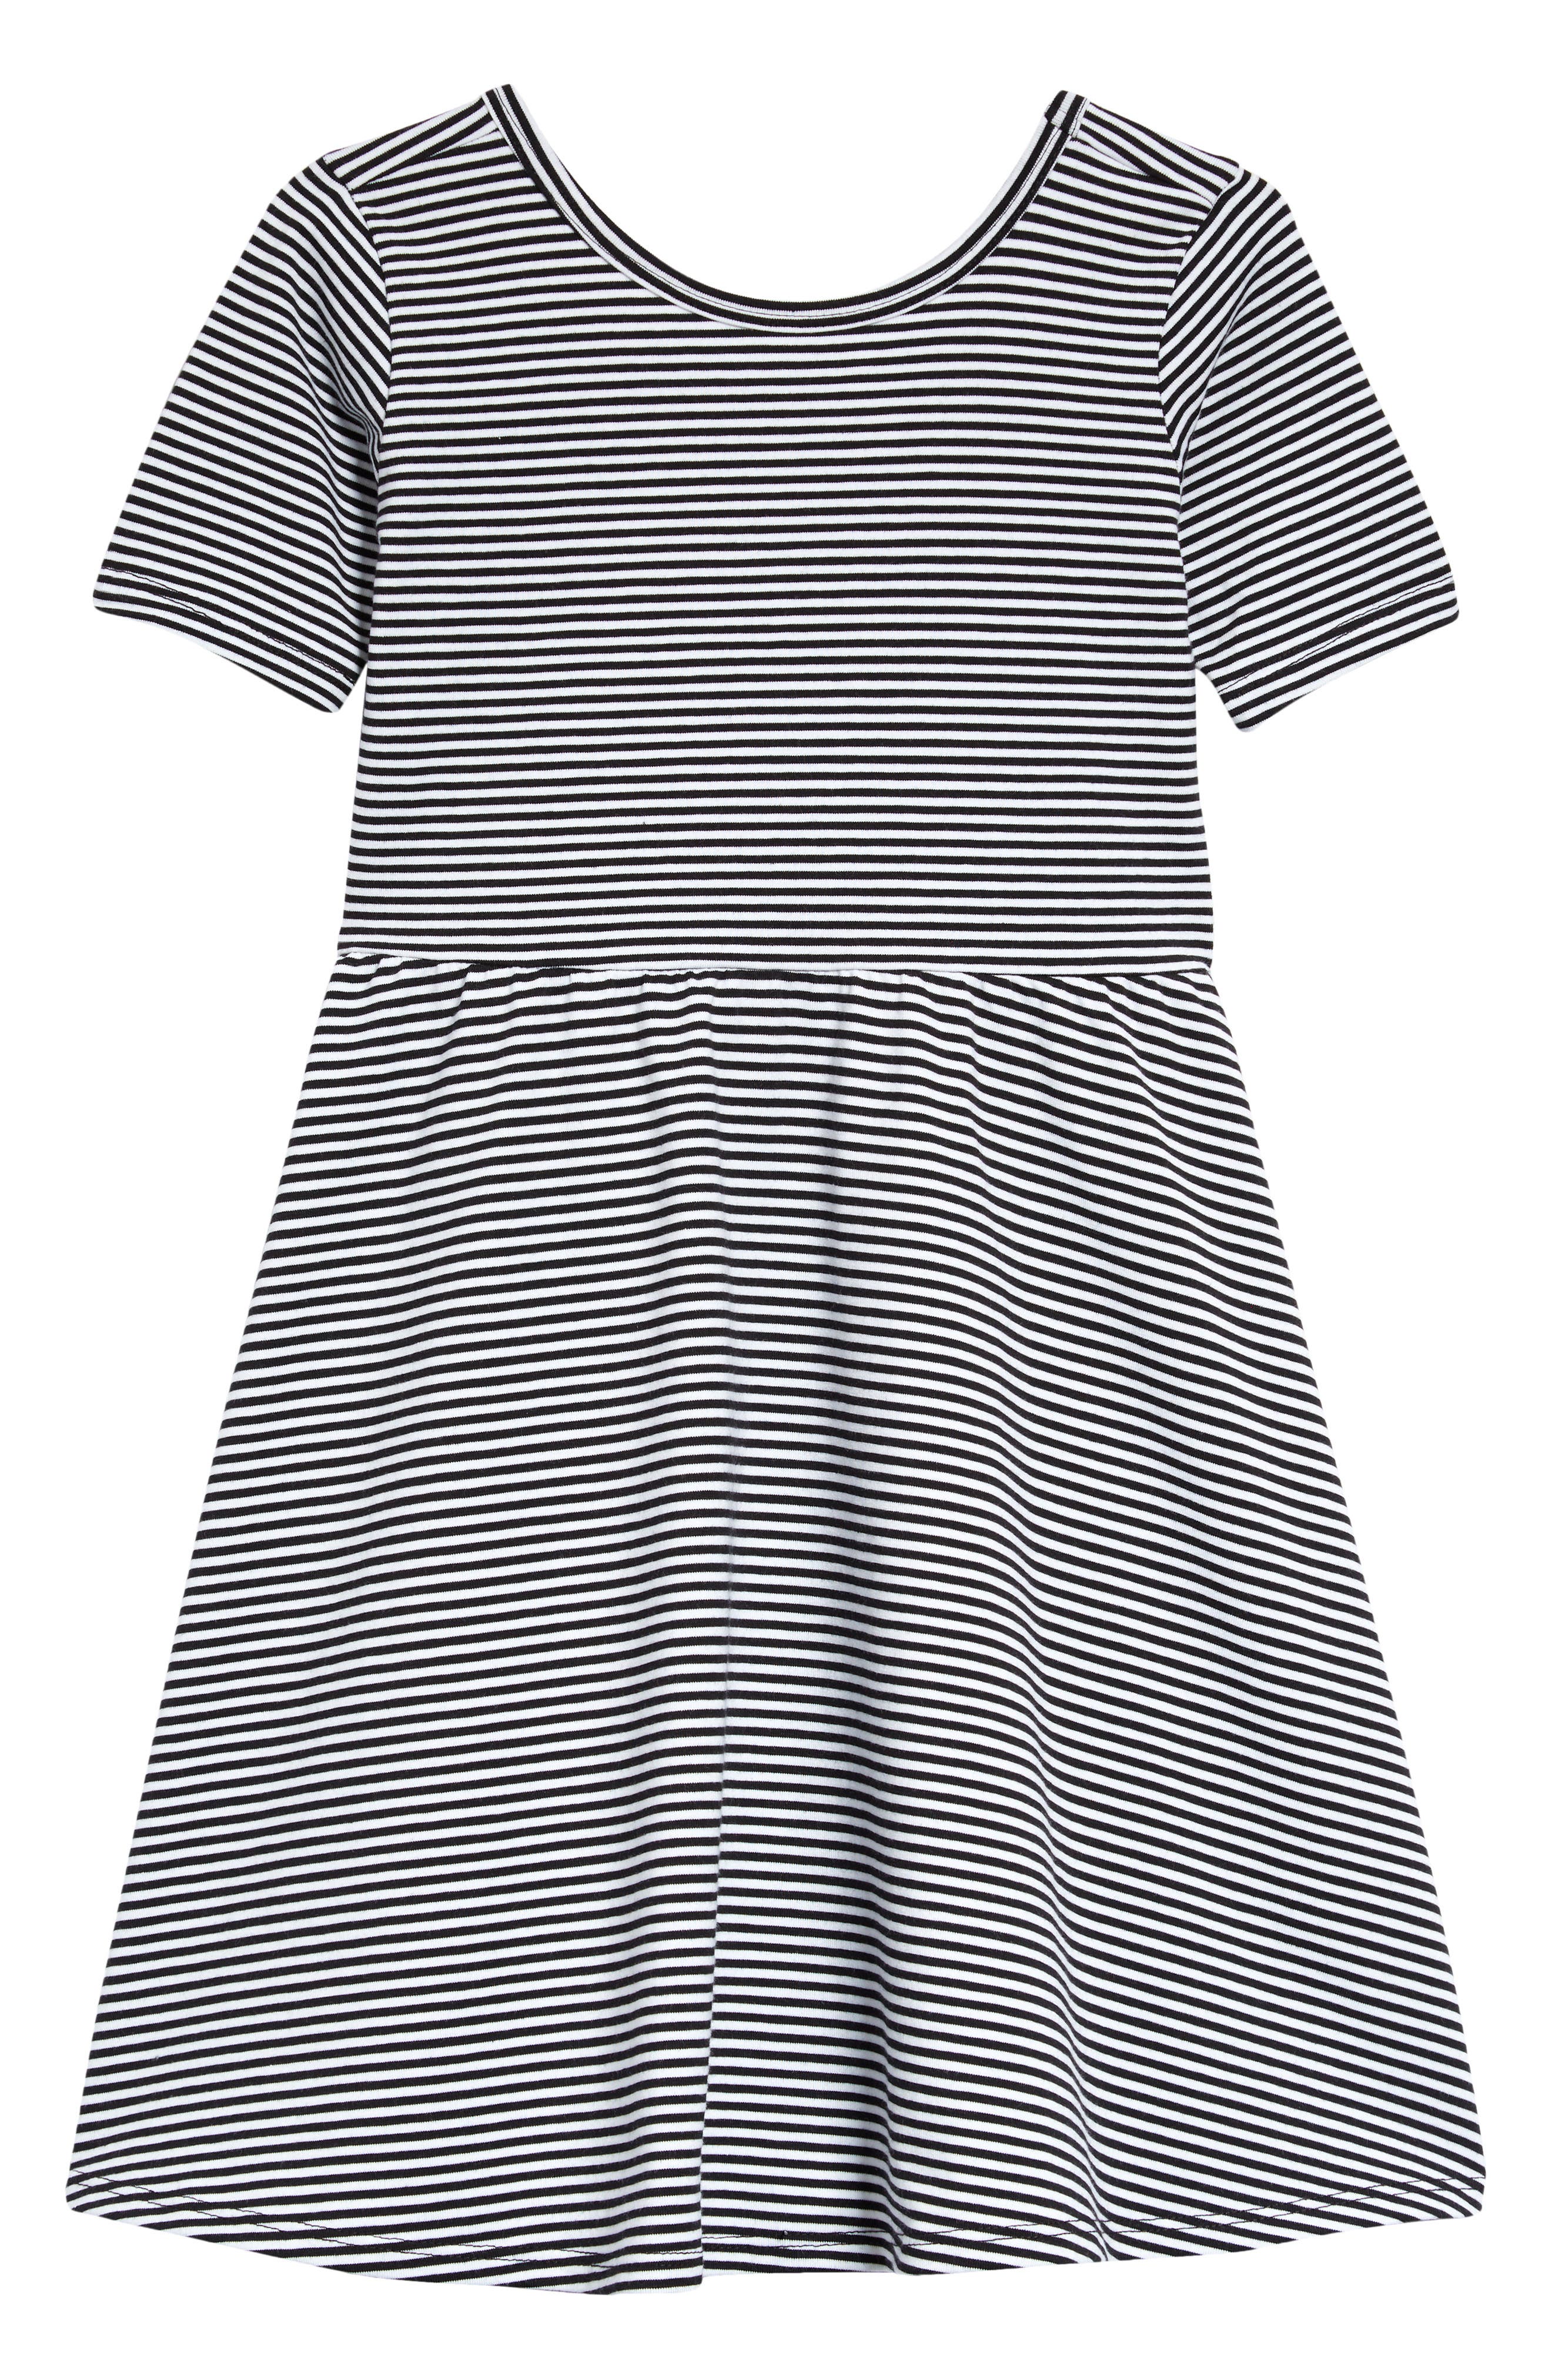 Niyage Toddler Girls Loose Cotton Short Sleeve T-Shirt Dress A-Line Skater Dresses 